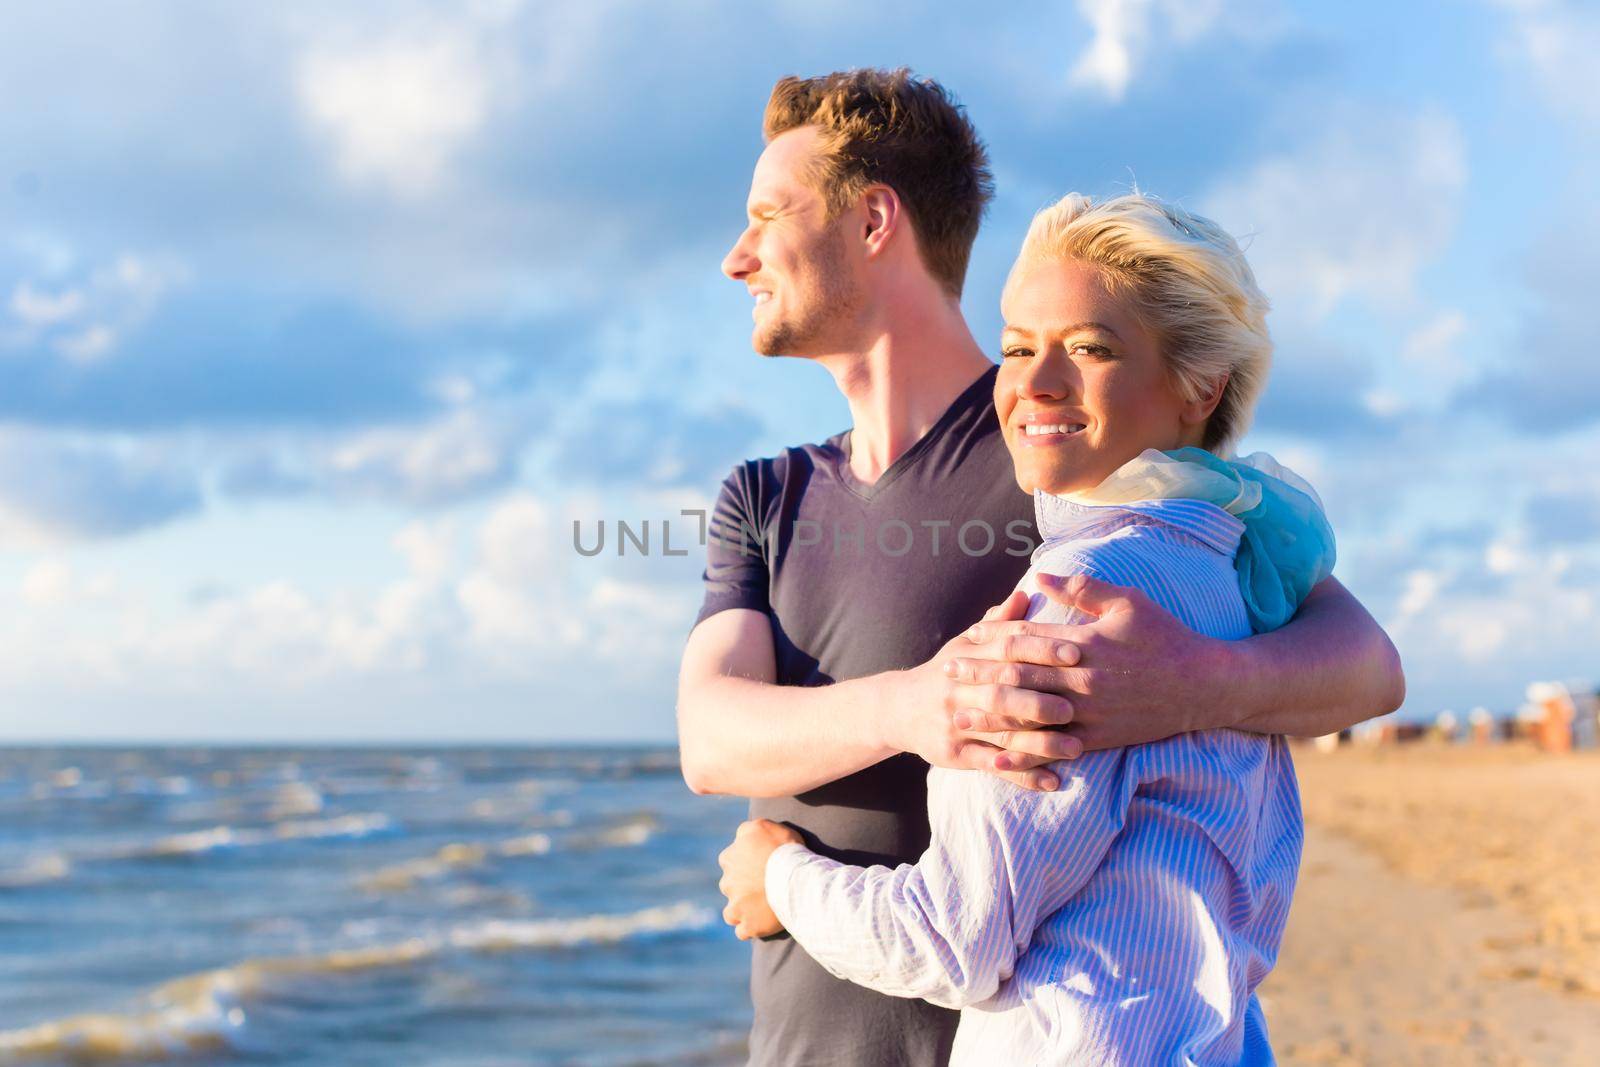 Couple enjoying romantic sunset on beach by Kzenon